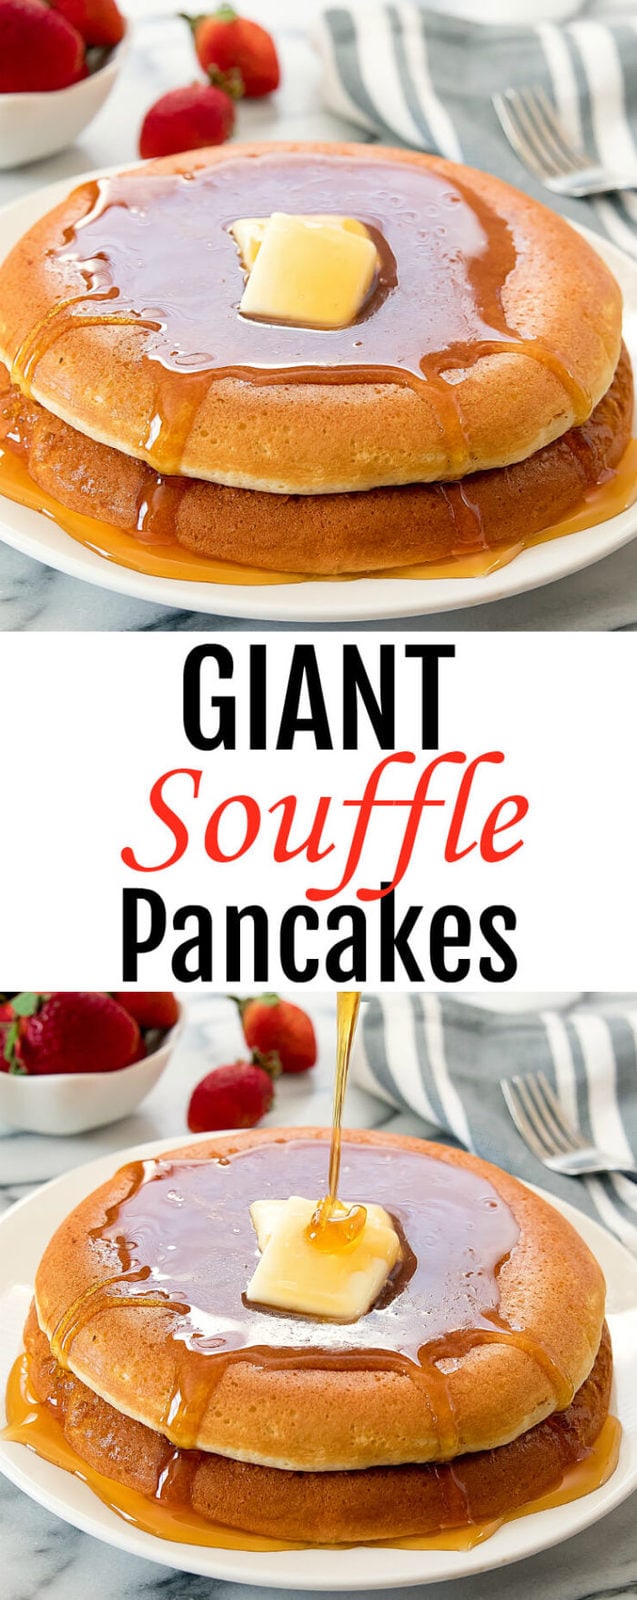 Giant Souffle Pancakes